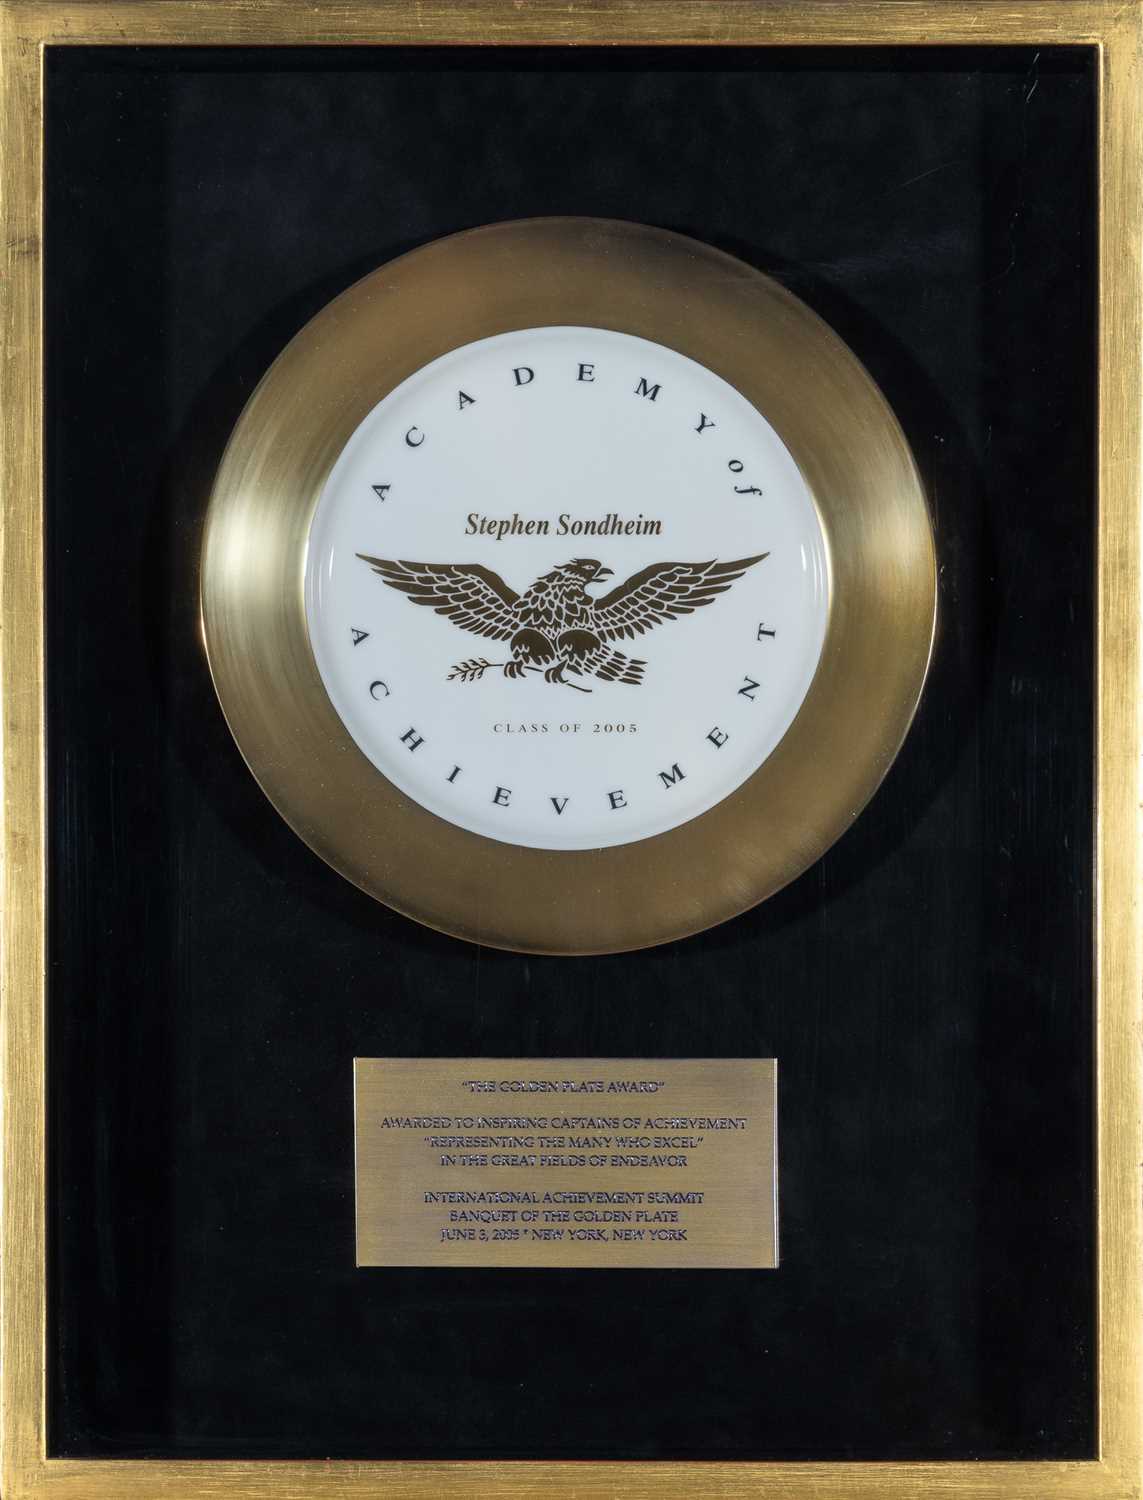 Lot 308 - Golden Plate Award presented to Stephen Sondheim